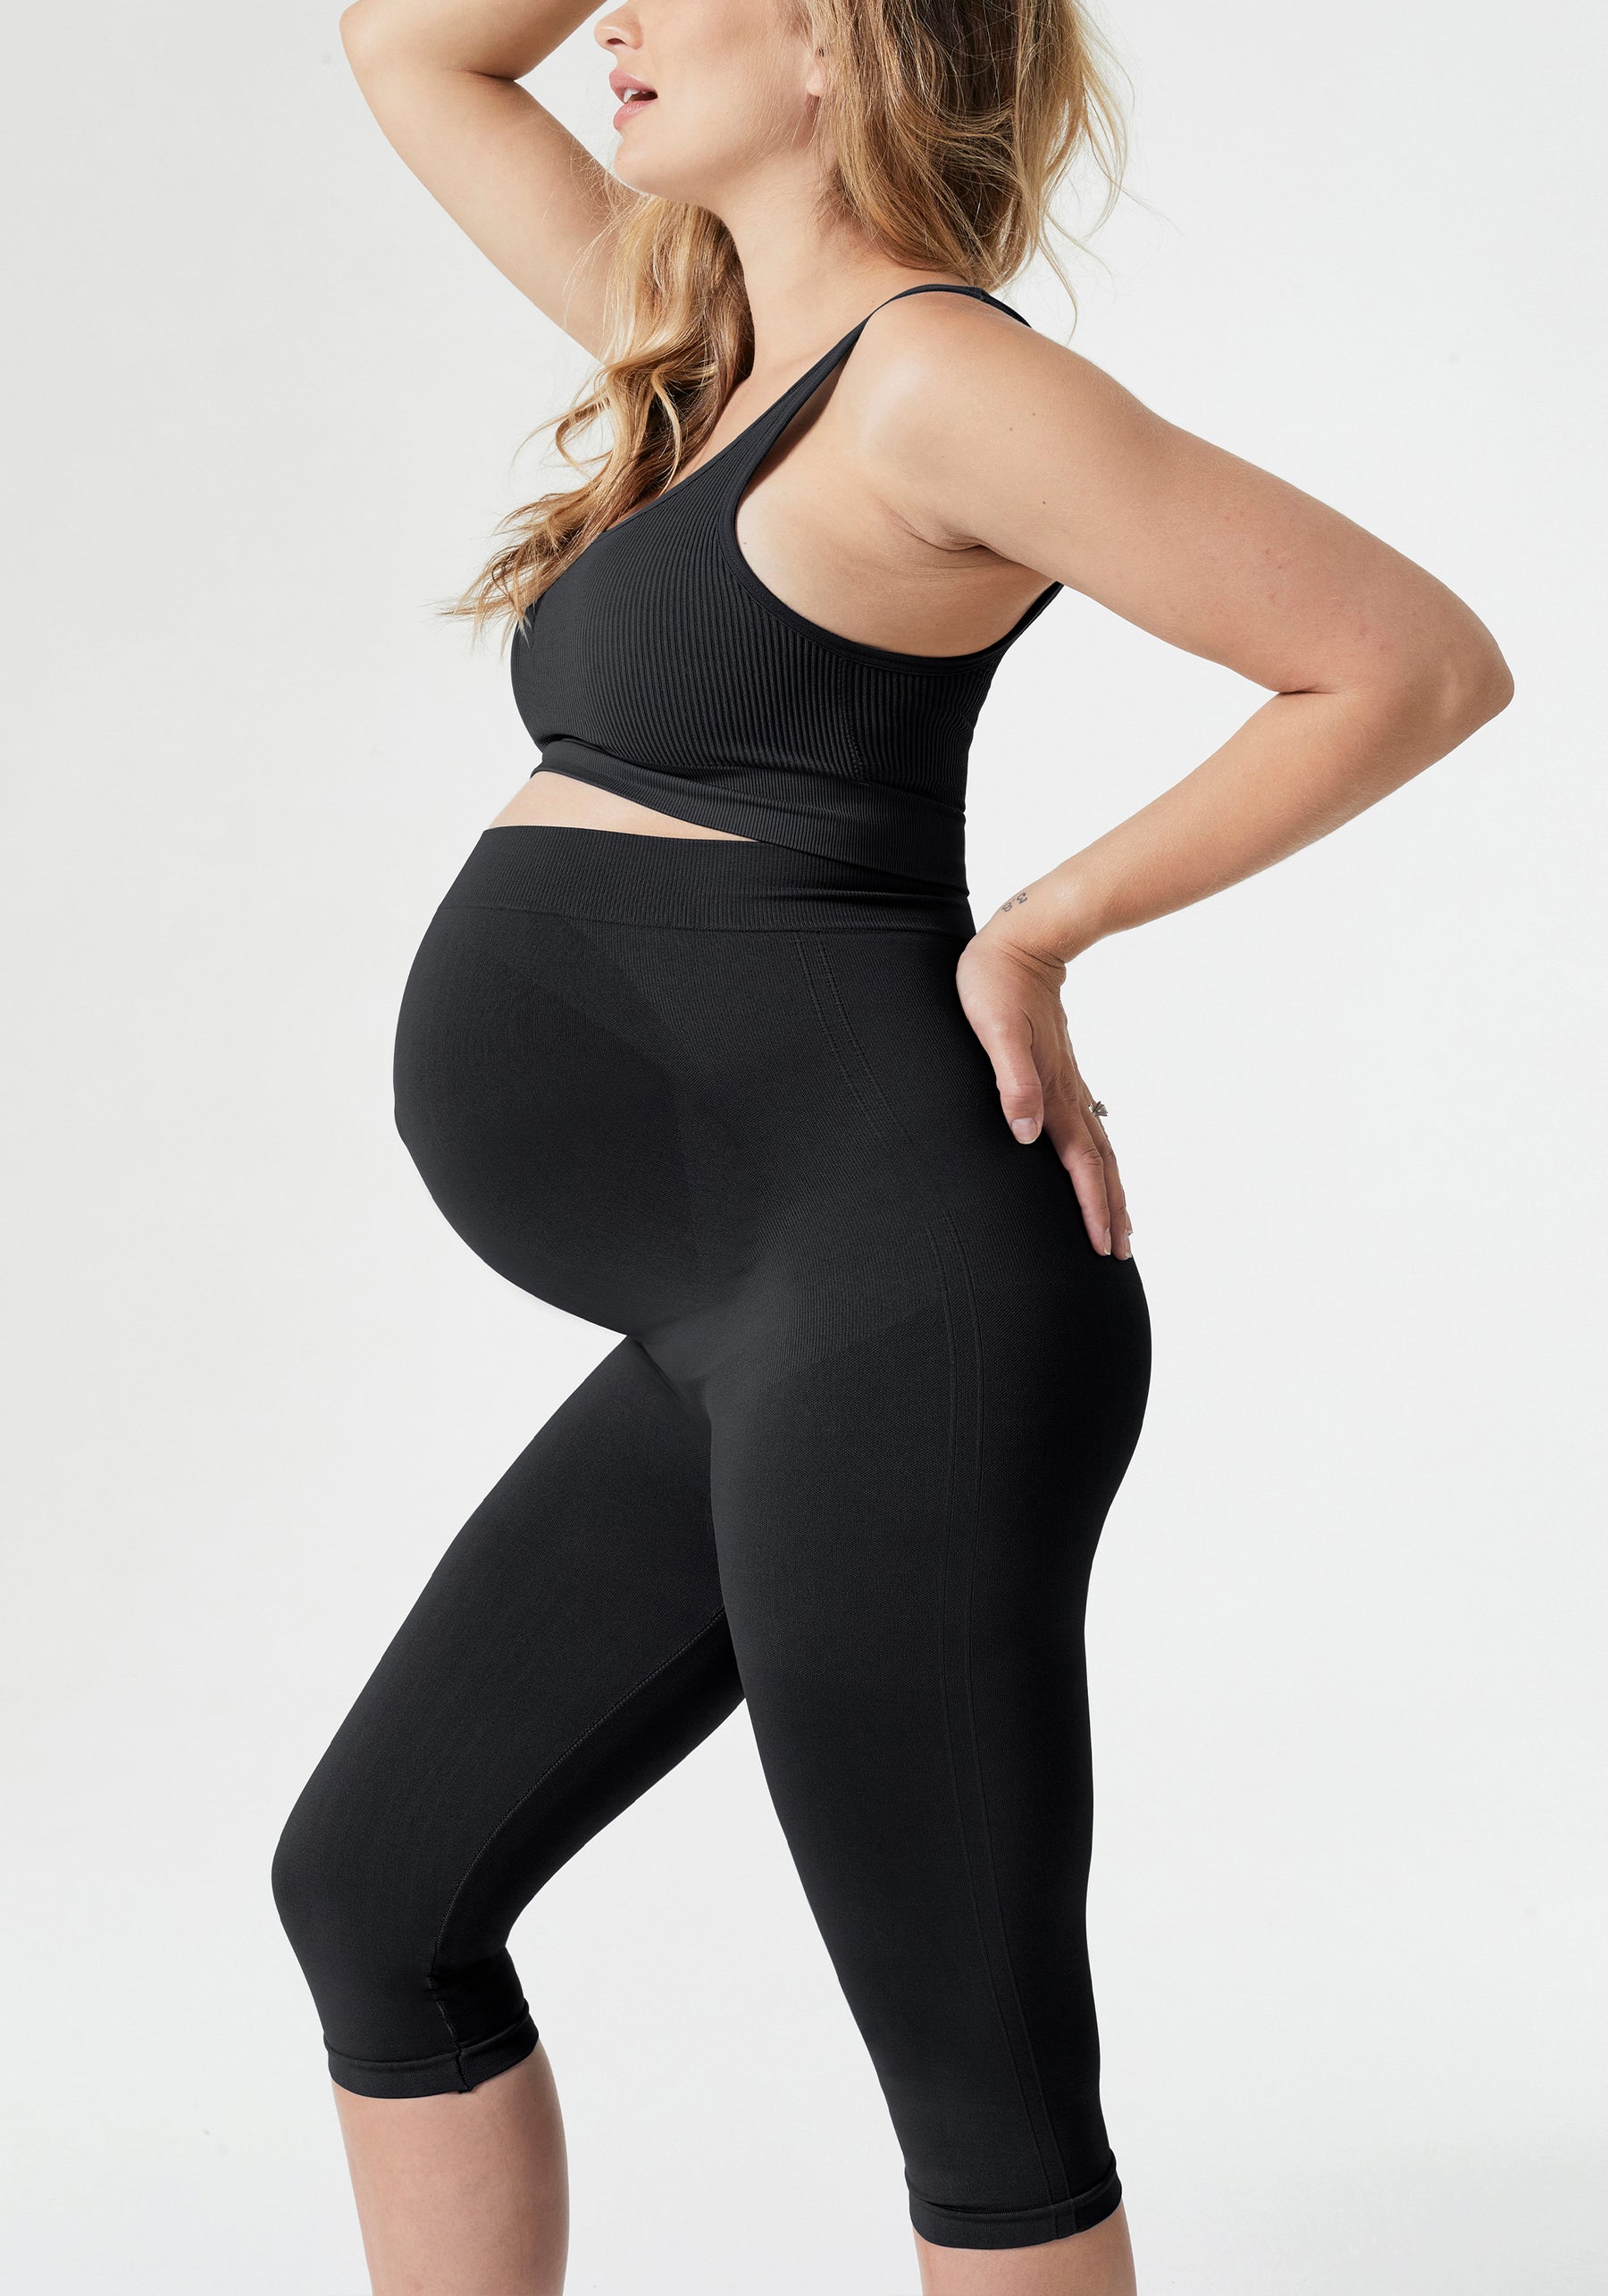 Belly Bandit Postpartum Maternity Leggings - Black, Medium 